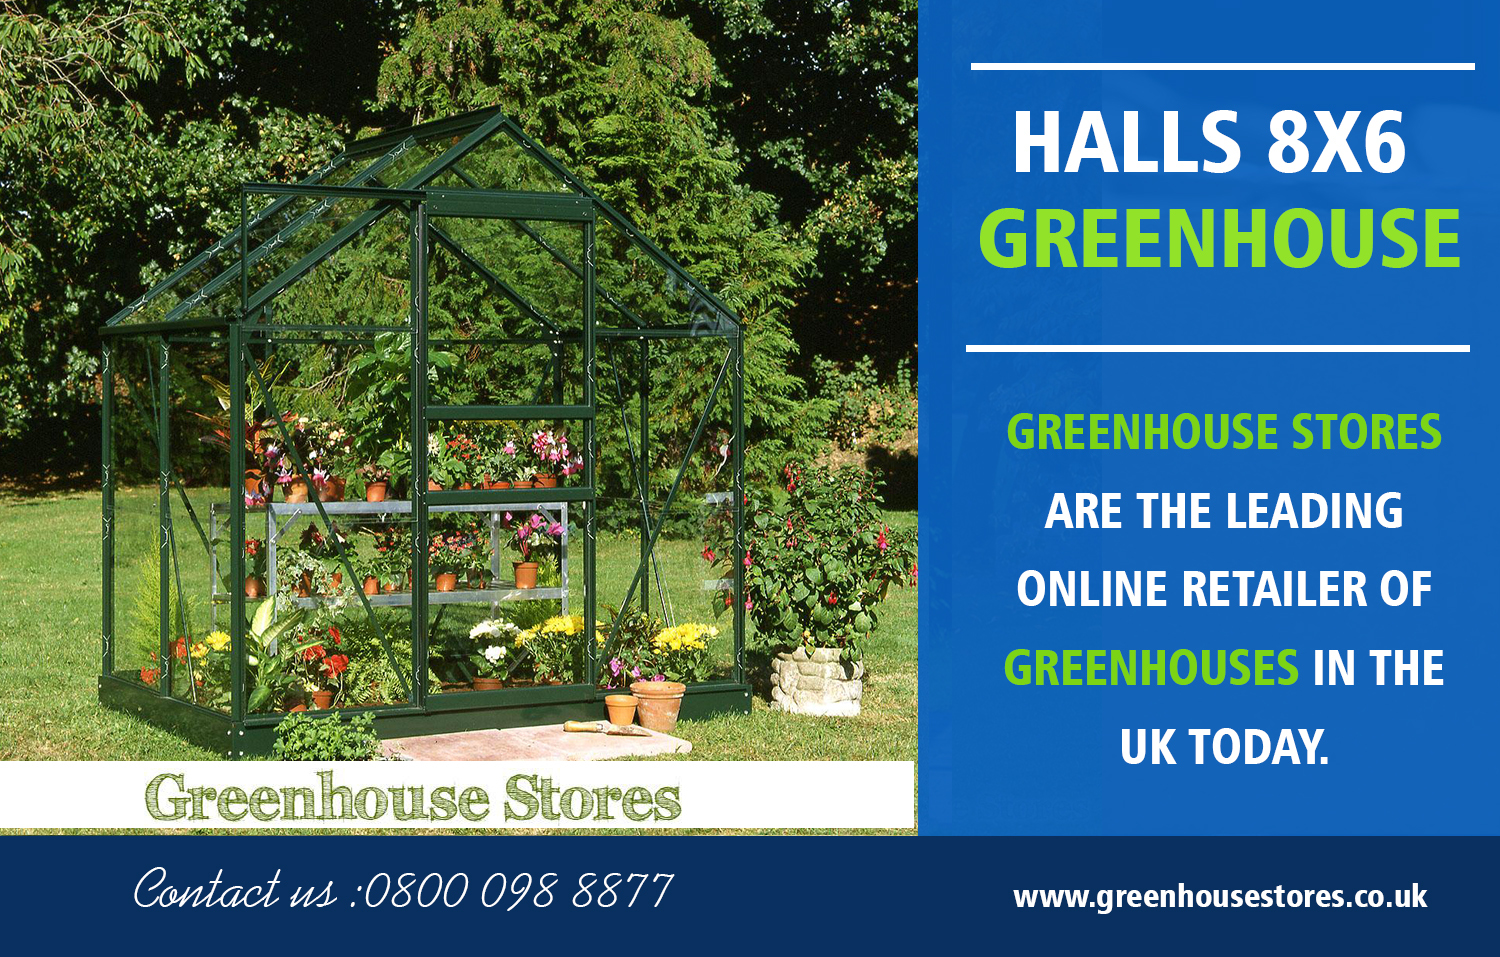 Halls 8x6 Greenhouse | 800 098 8877 | greenhousestores.co.uk